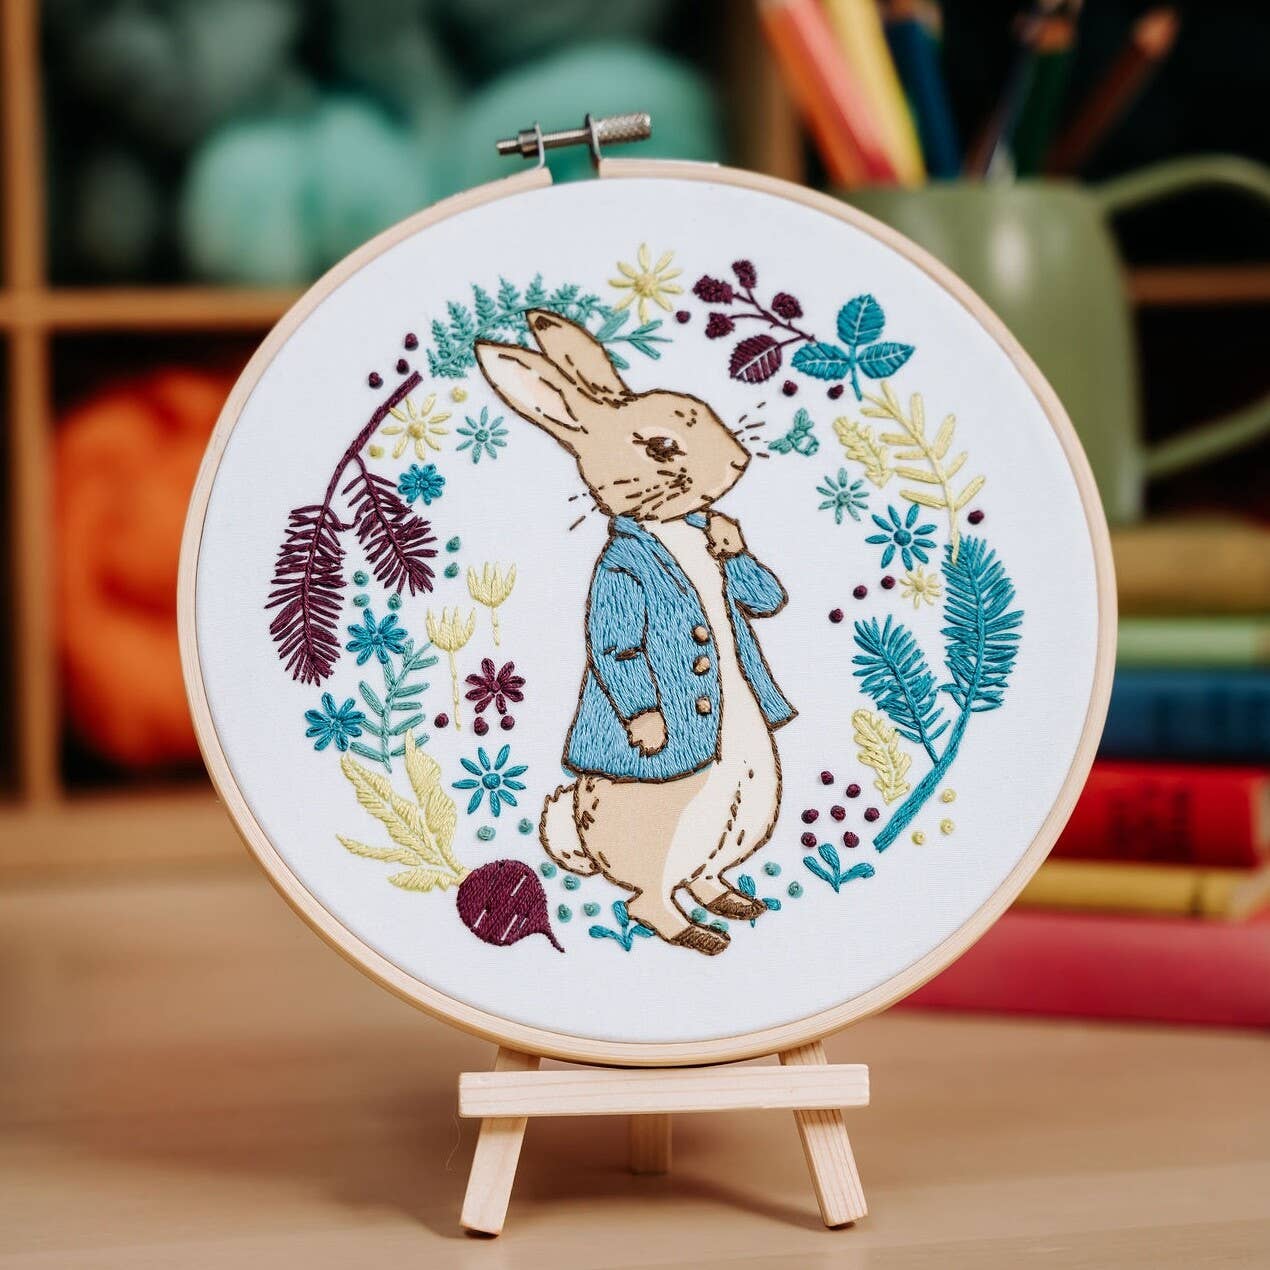 The Crafty Kit Company - Beatrix Potter - Peter Rabbit Plans His Next Adventure